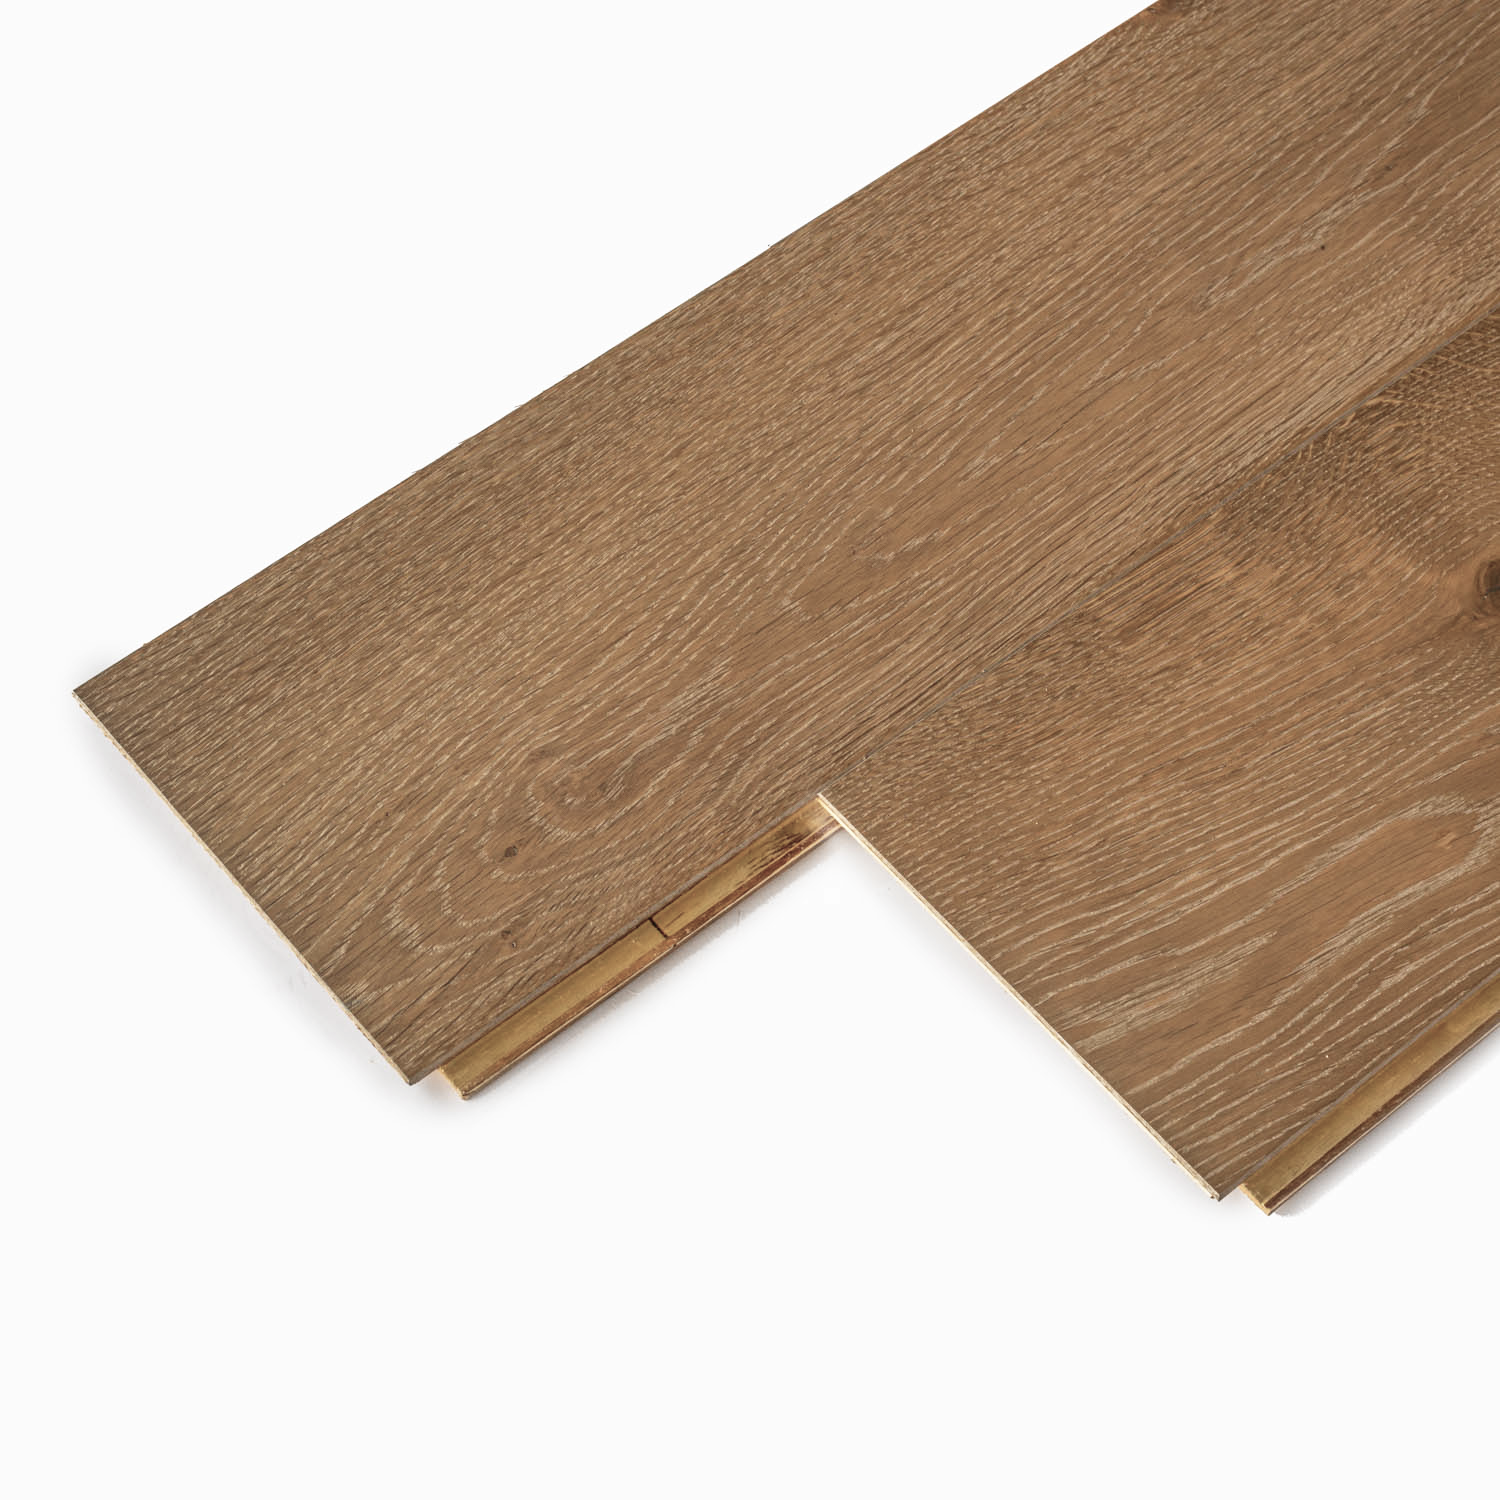 Portofino Timber Flooring